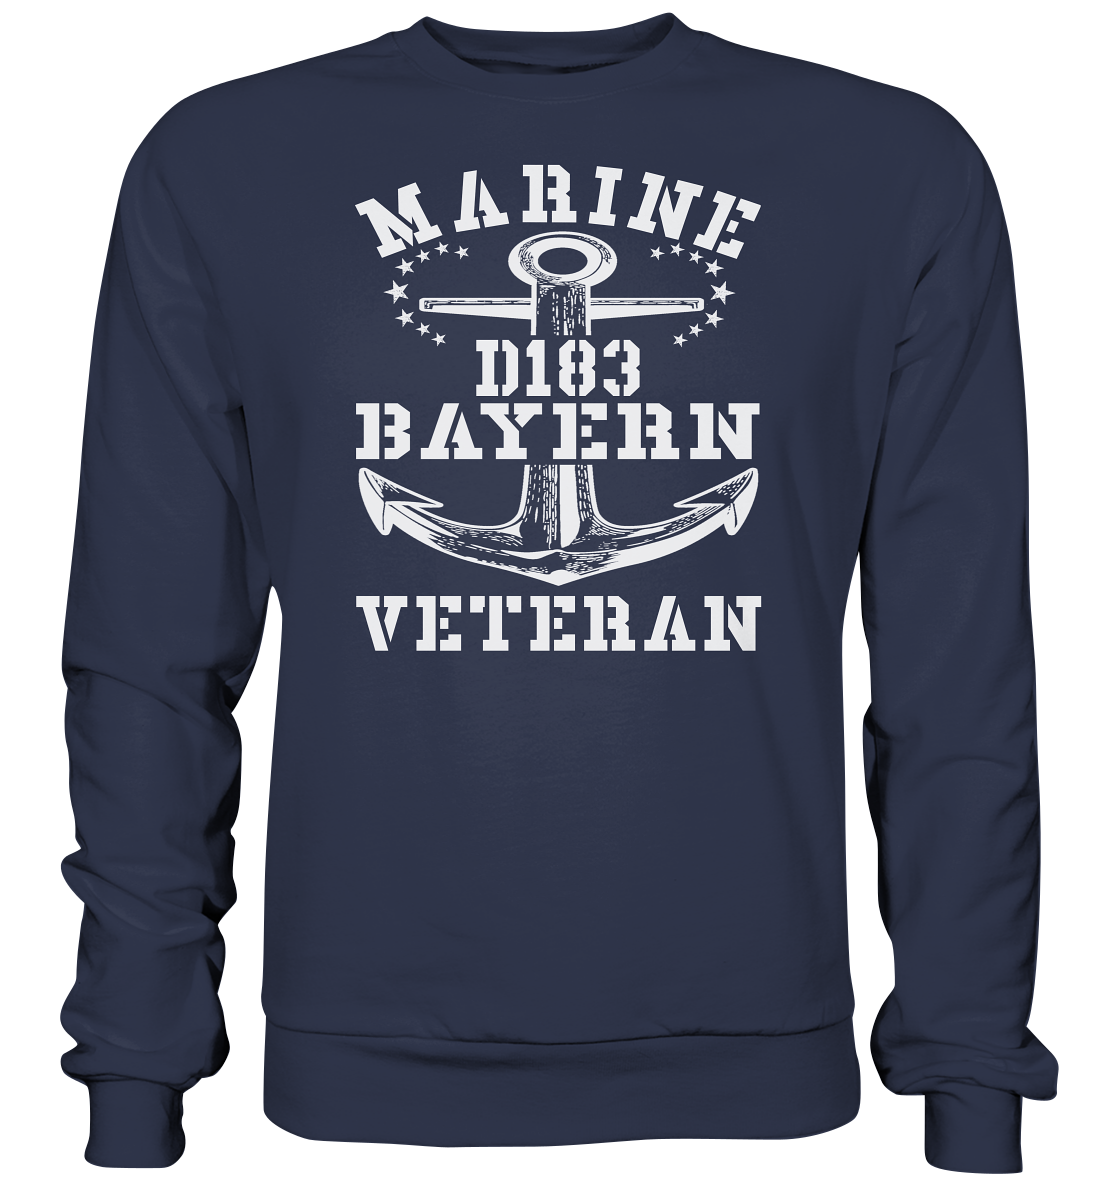 Zerstörer D183 BAYERN Marine Veteran - Premium Sweatshirt